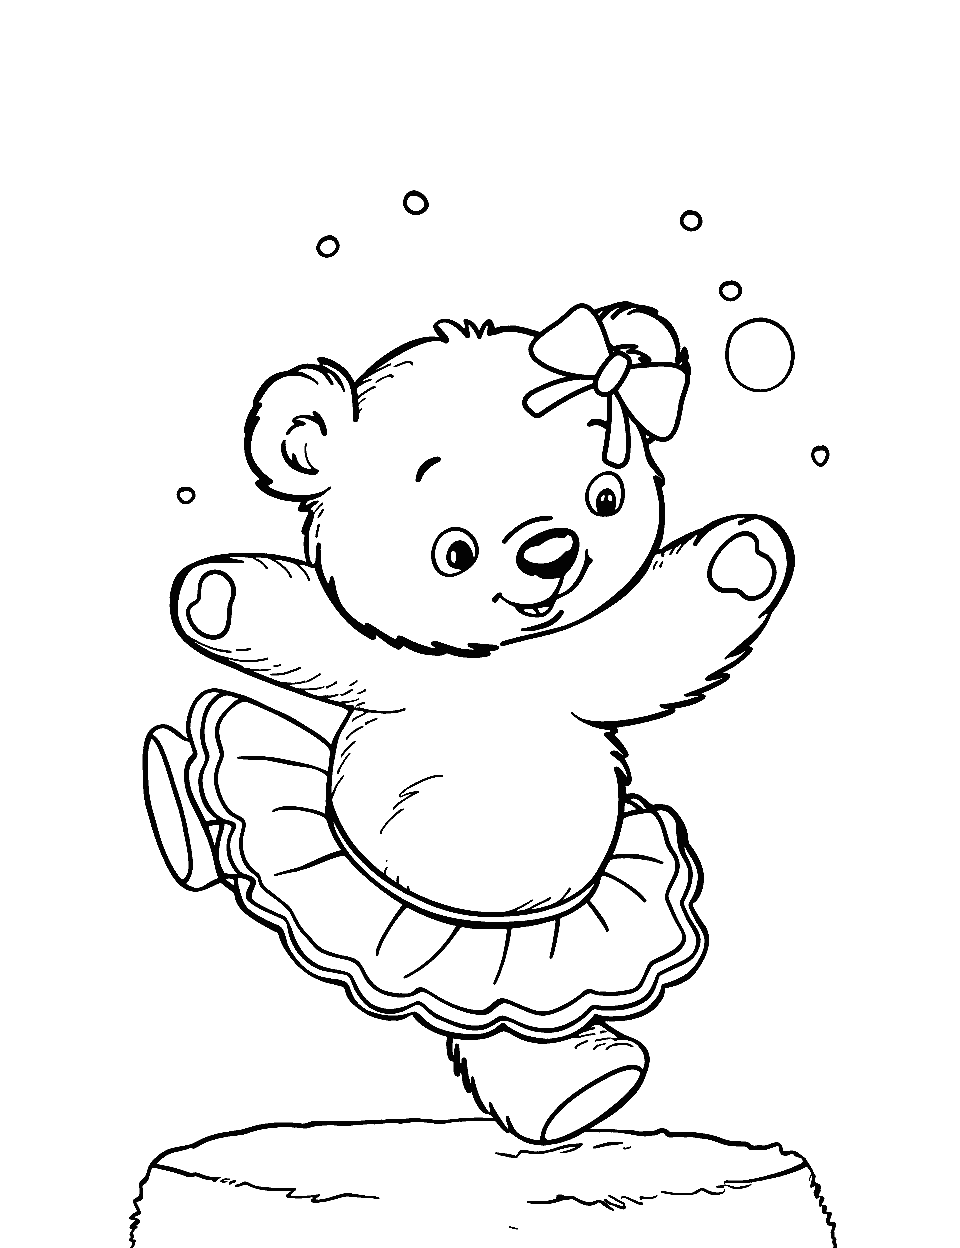 Ballerina Teddy Bear Performance Coloring Page - A teddy bear dressed as a ballerina.